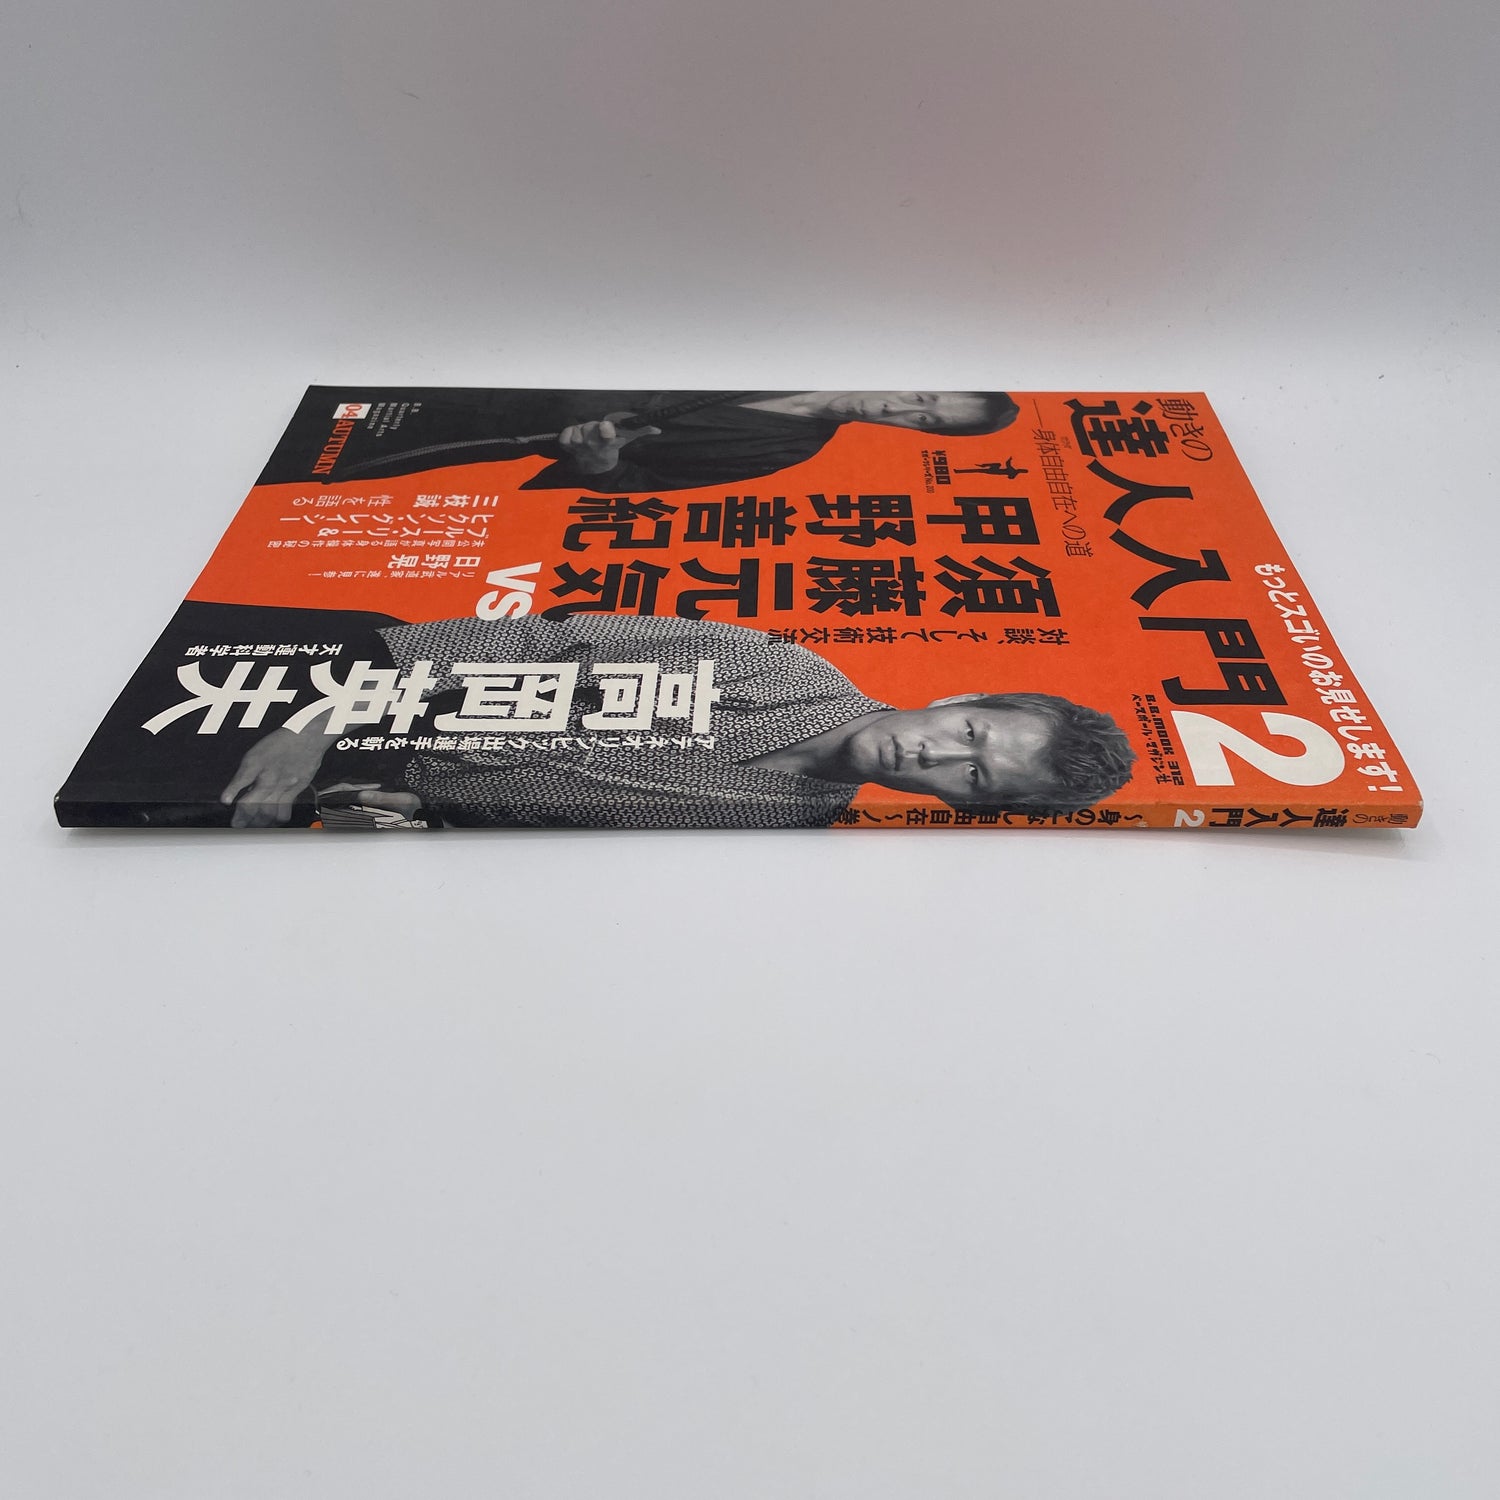 Tatsujin Nyumon Magazine 2 (Preowned)